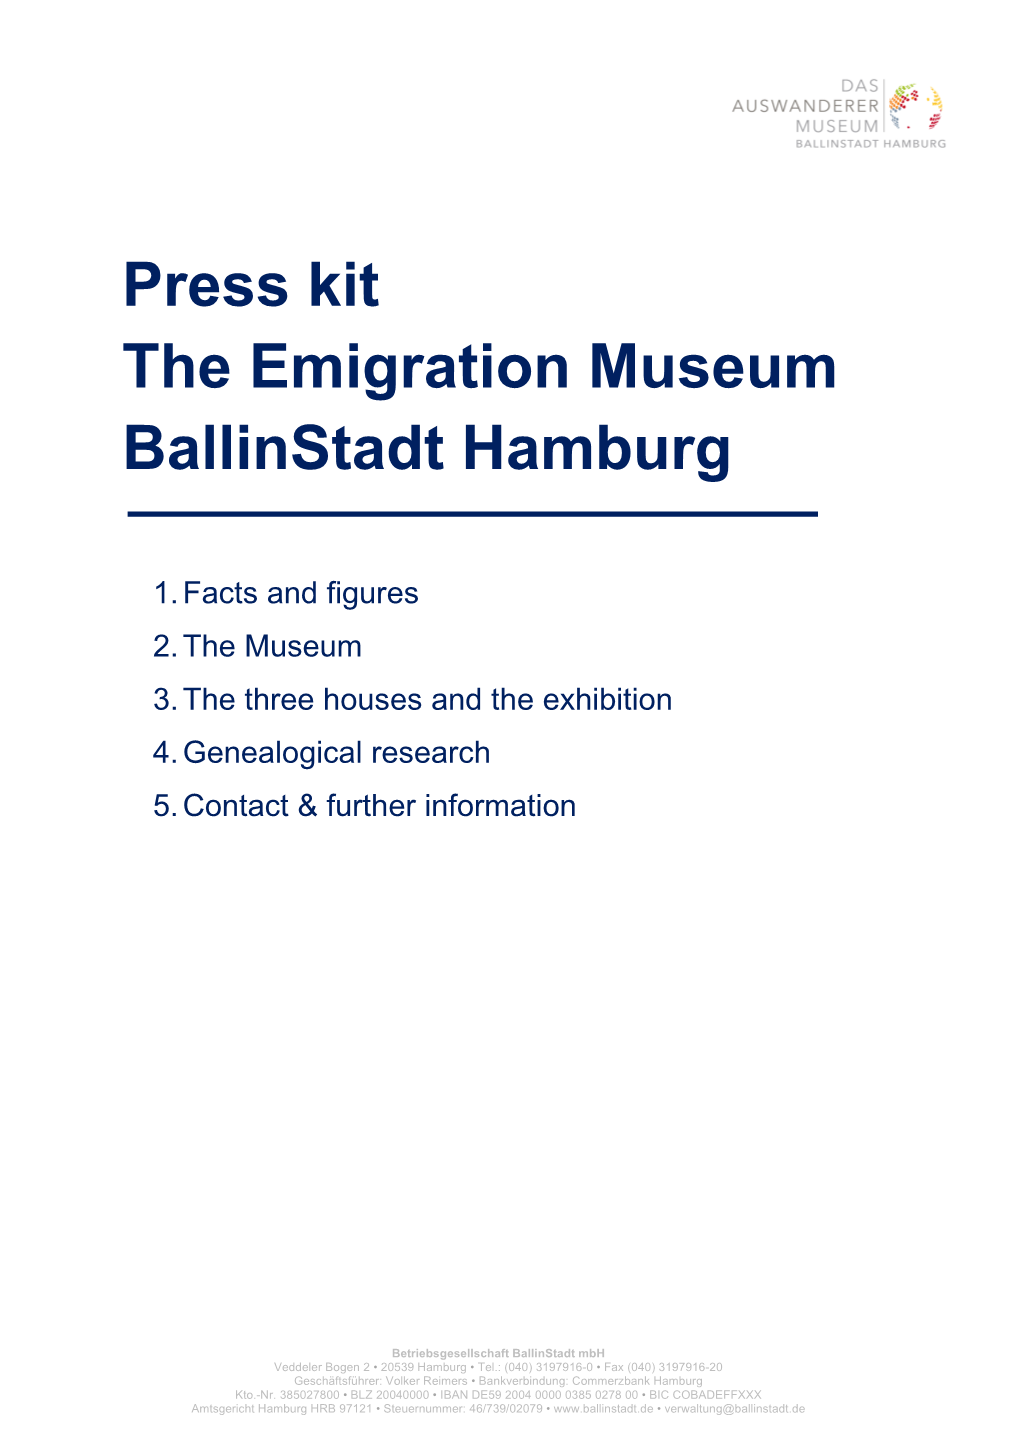 Press Kit the Emigration Museum Ballinstadt Hamburg